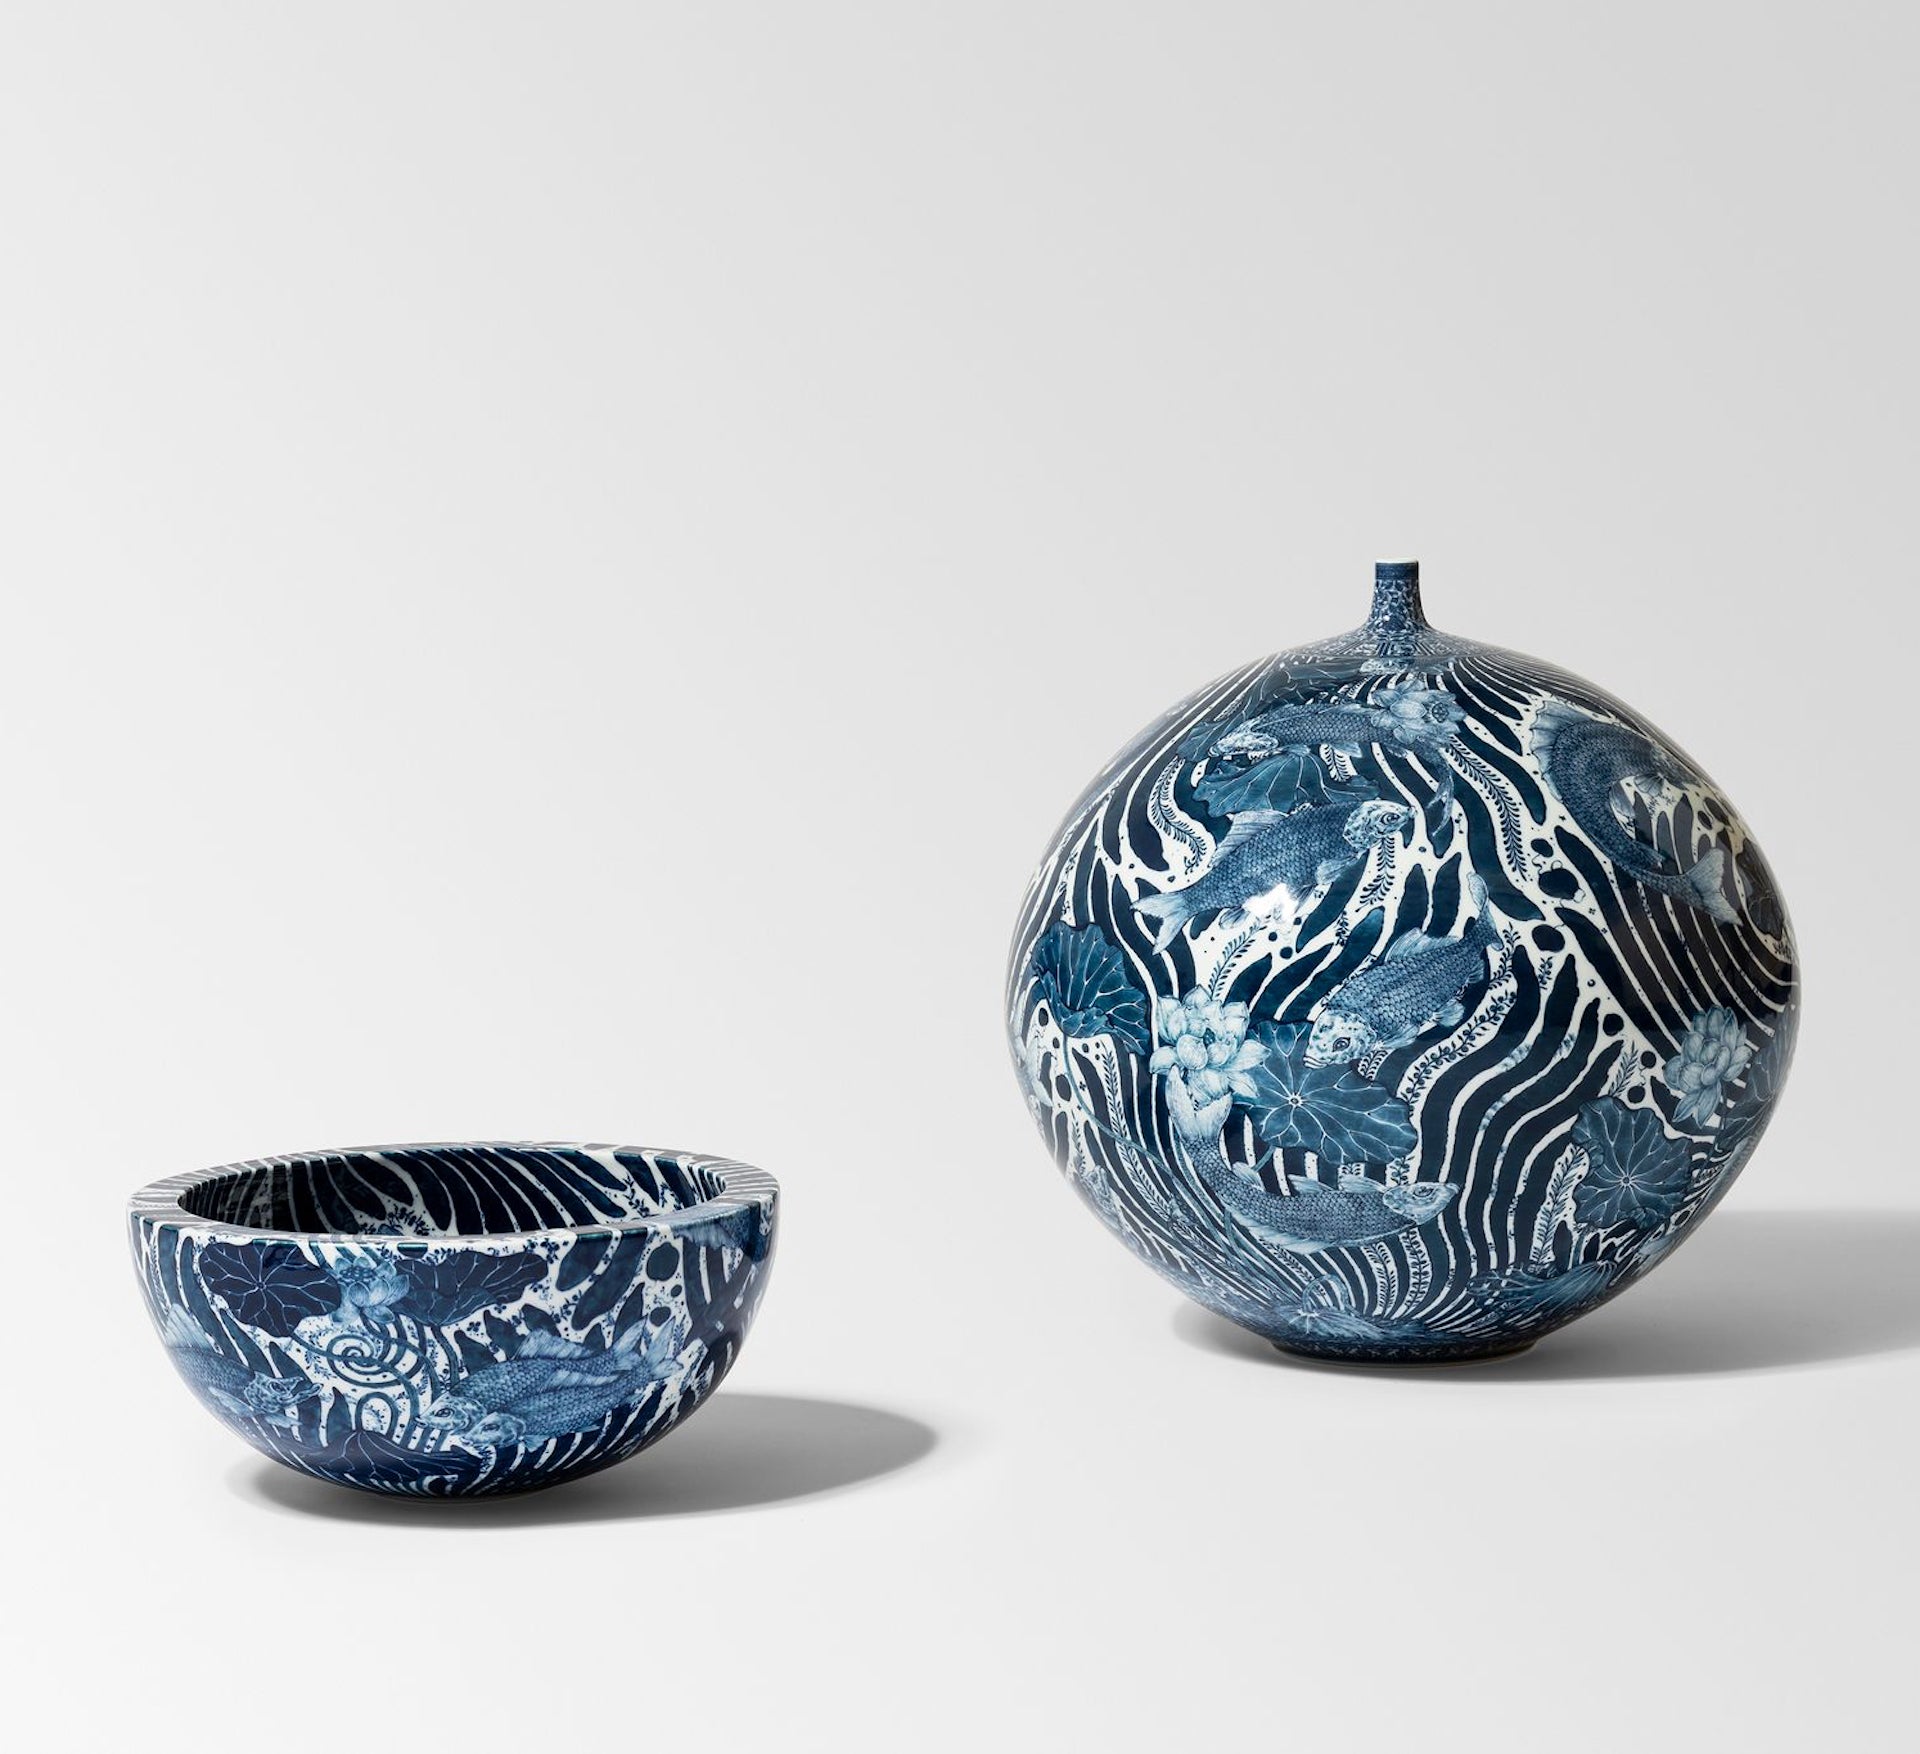 Porcelain vessels by Yuki Hayama, presented by Pierre Marie Giraud at Design Miami/ Basel 2023. Photo © Pierre Marie Giraud